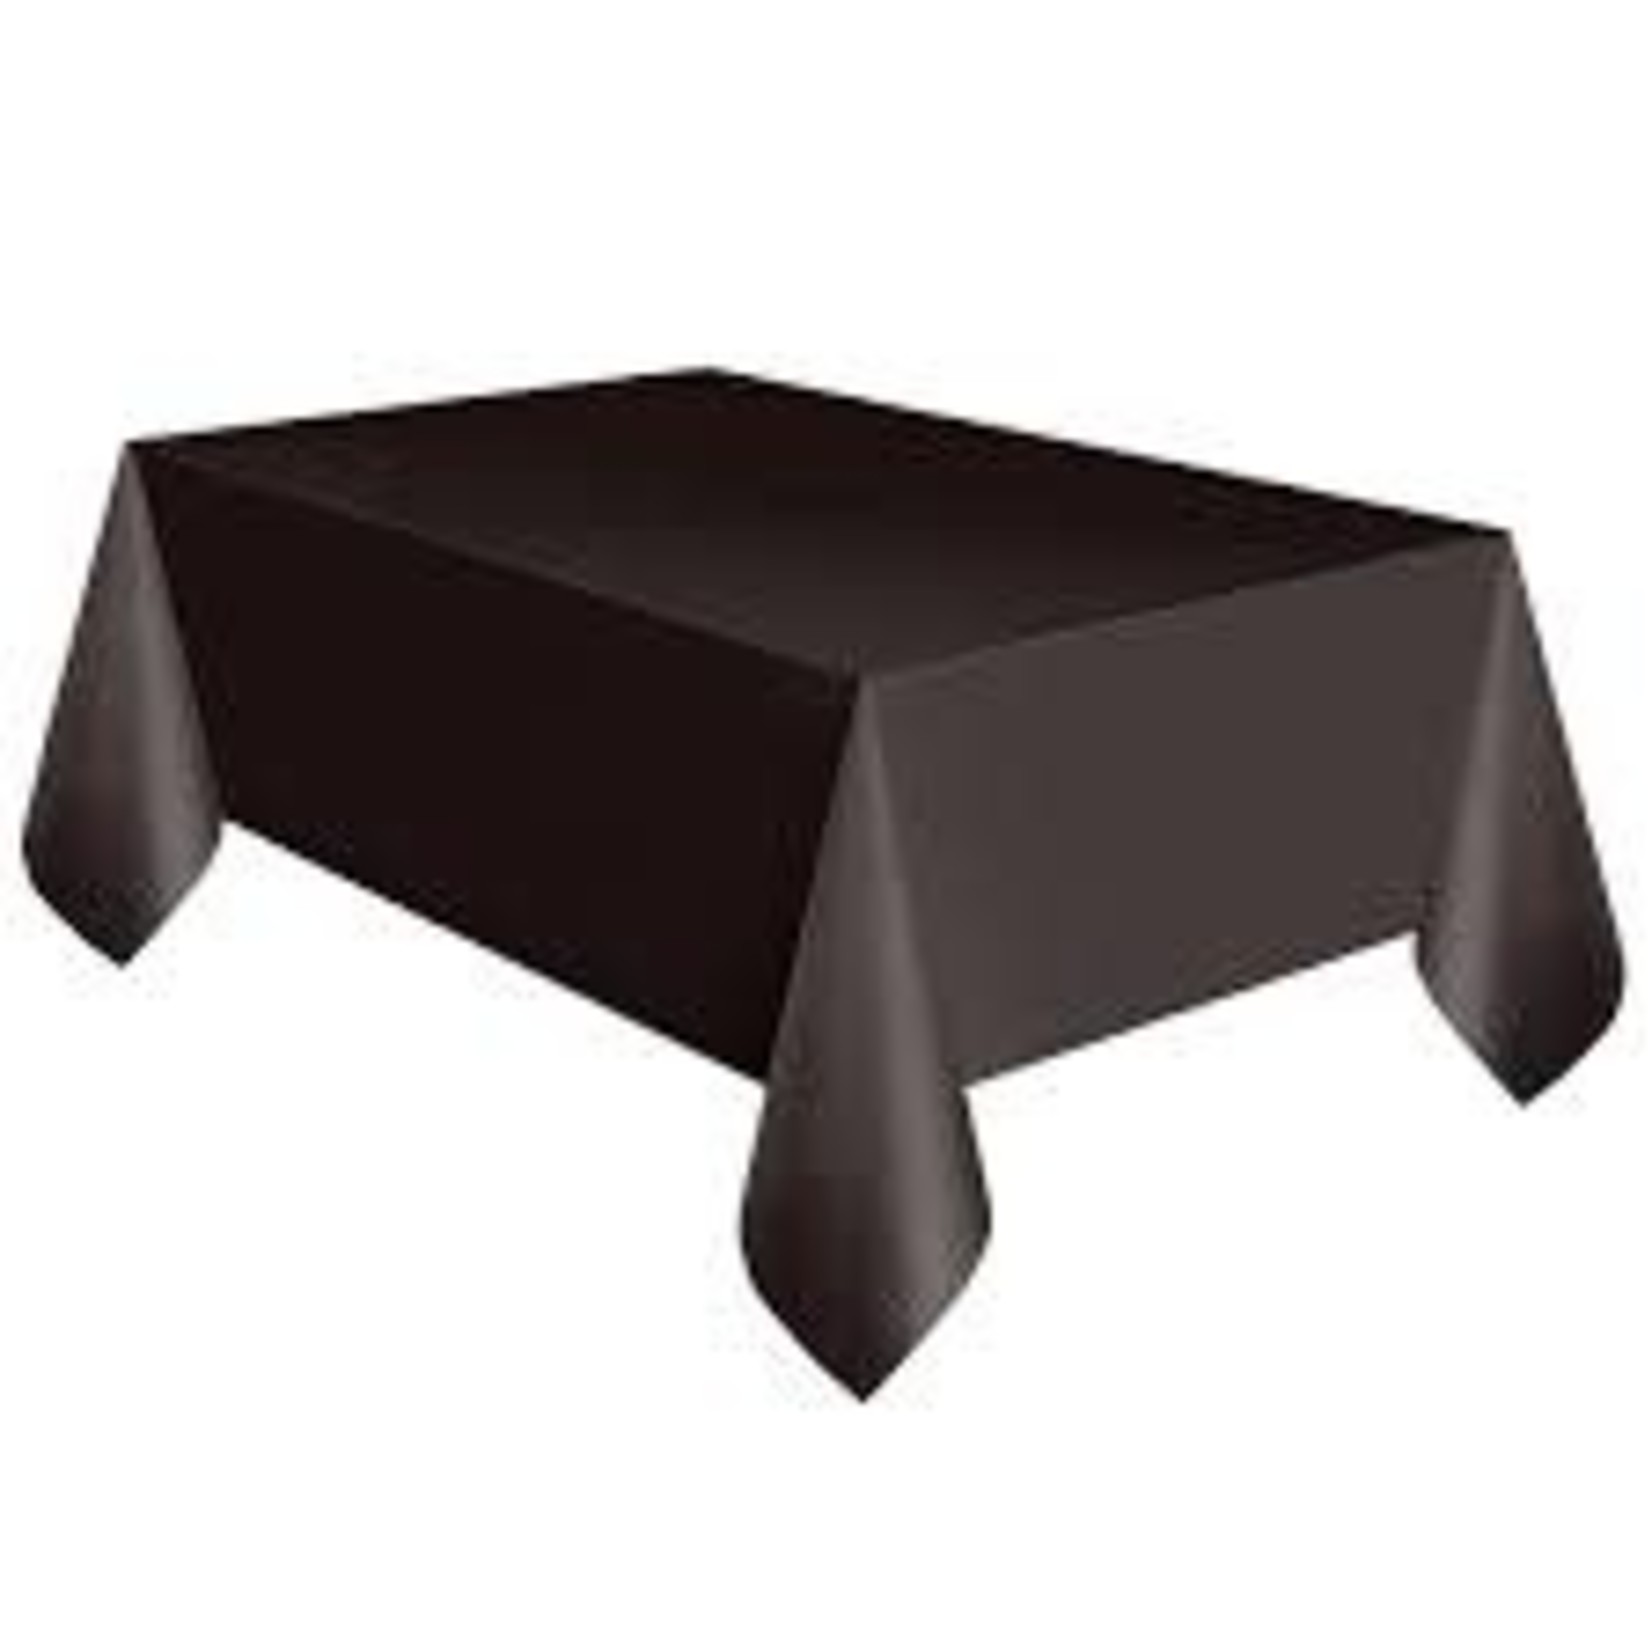 Black Plastic Table Cover 54x108